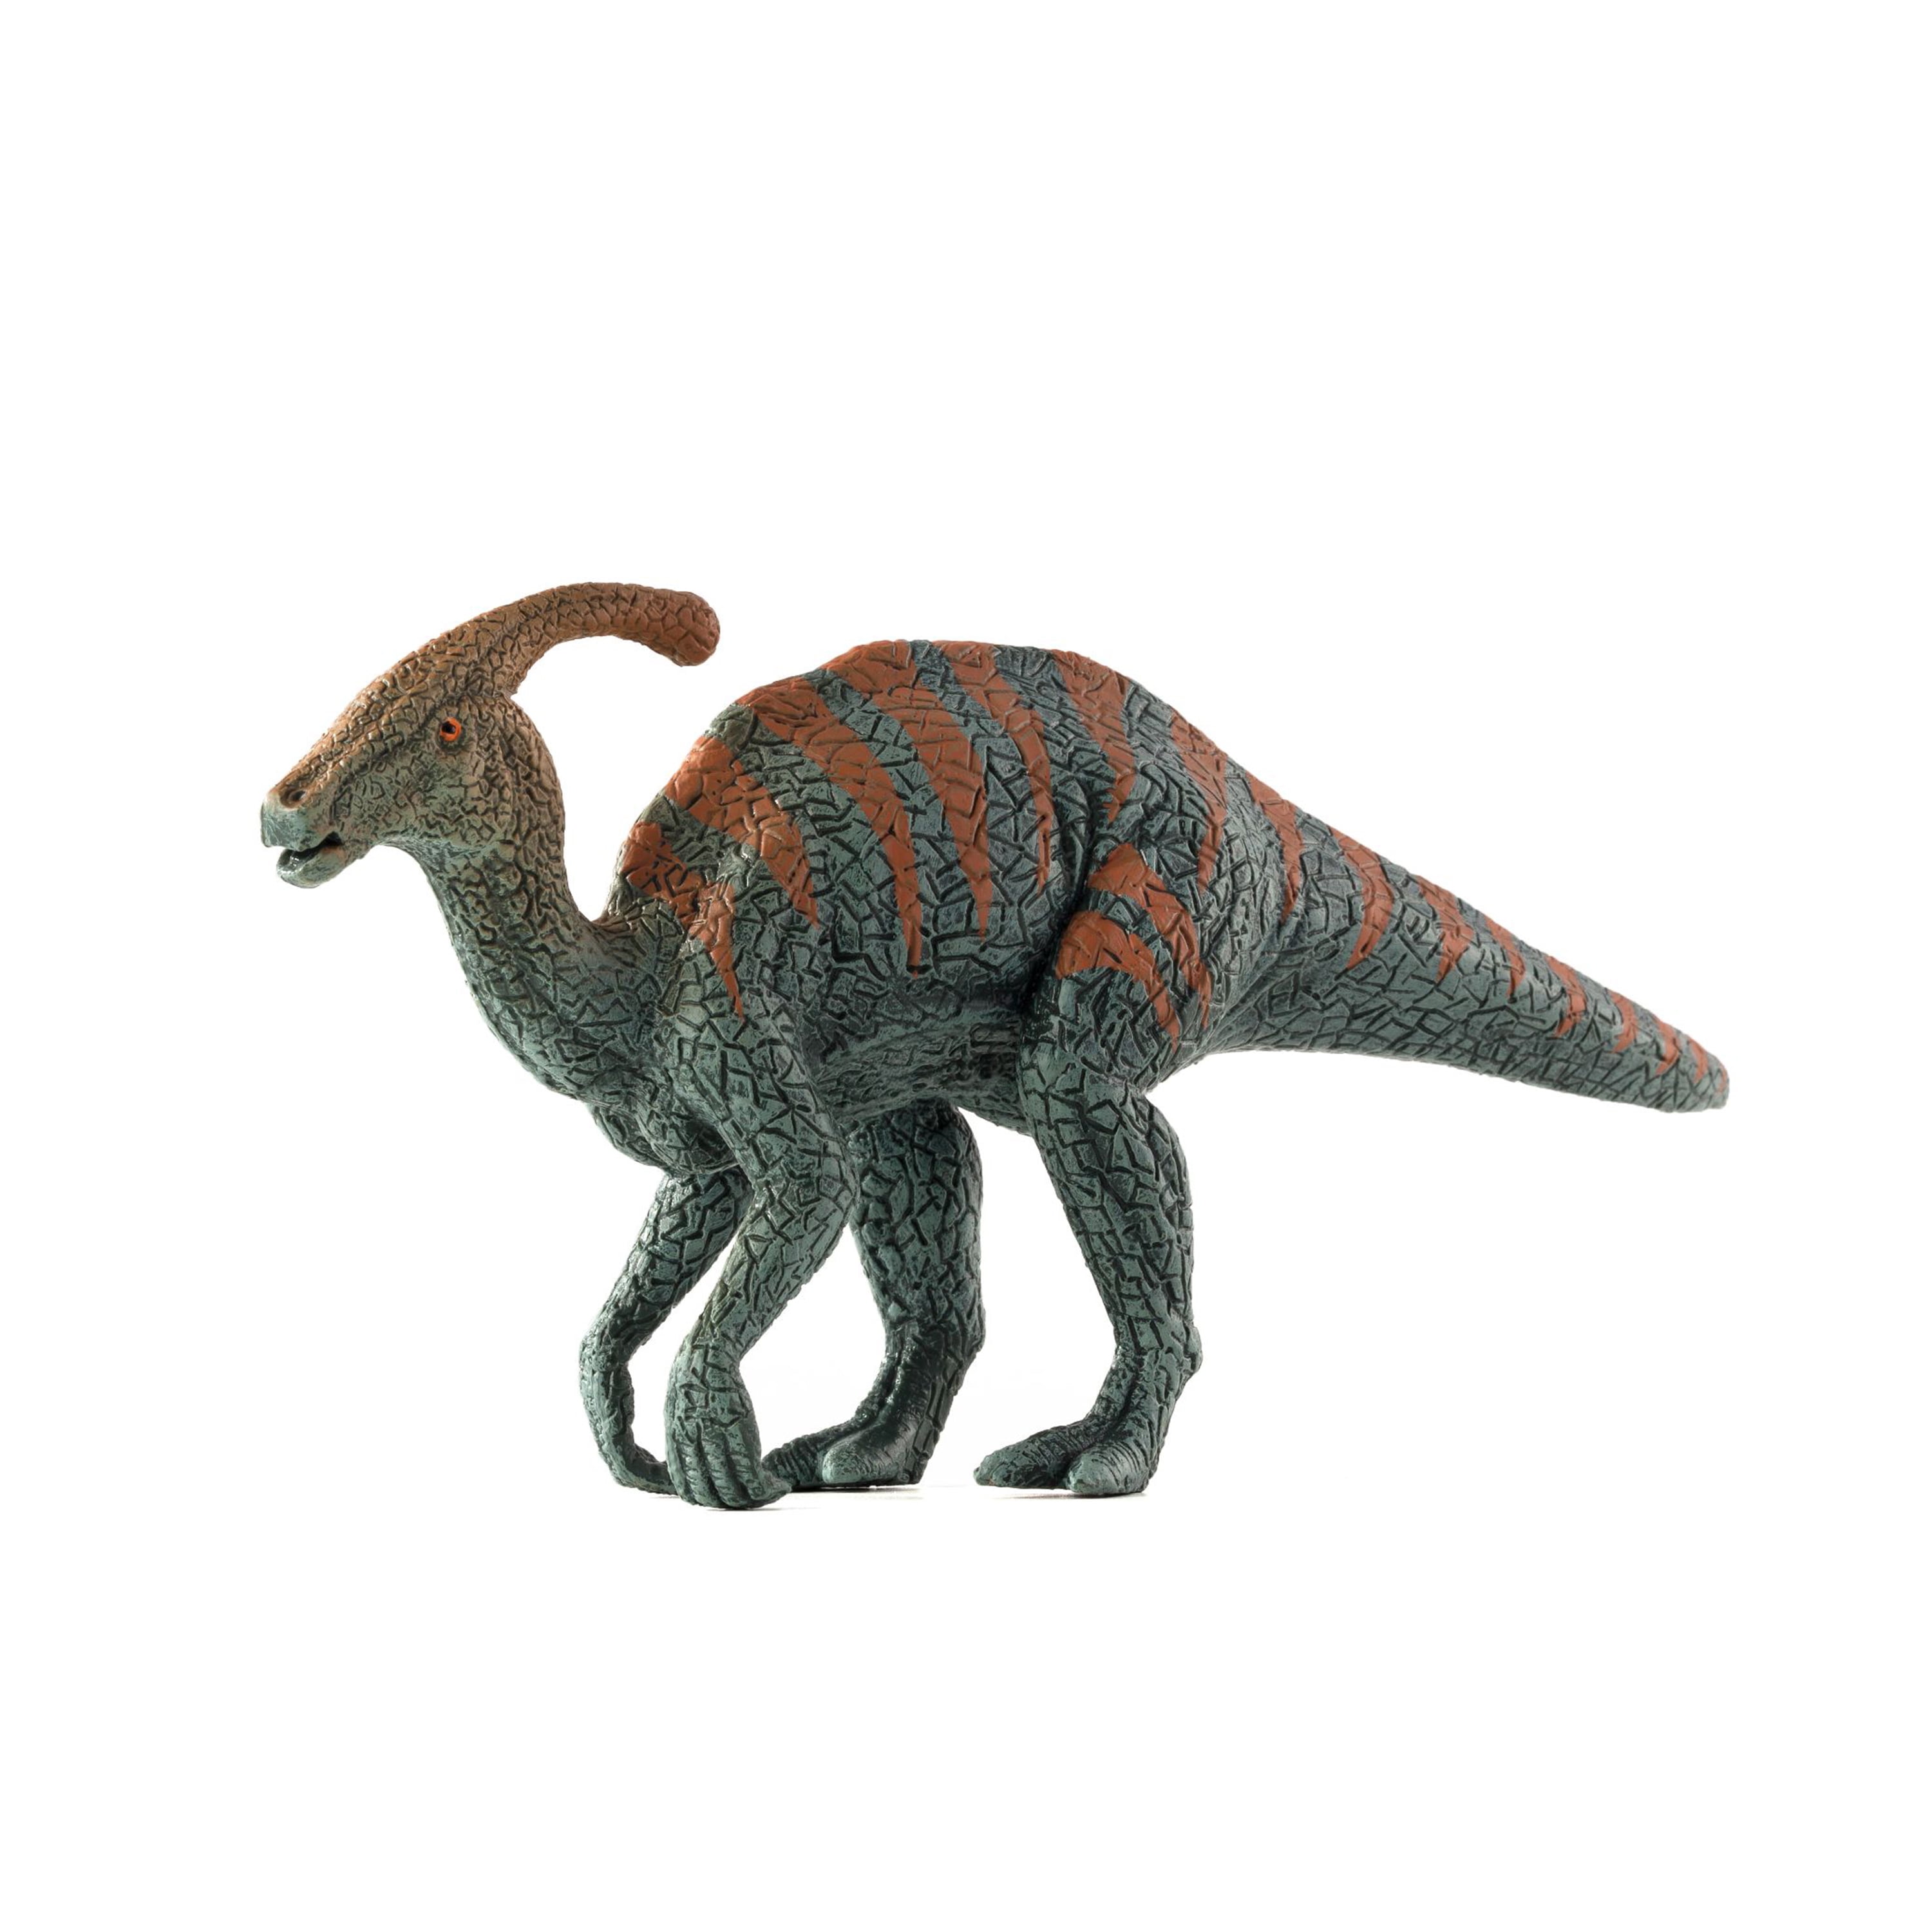 Sound Strike Parasaurolophus Dinosaur Action Figure Realistic Dinosaur Sounds